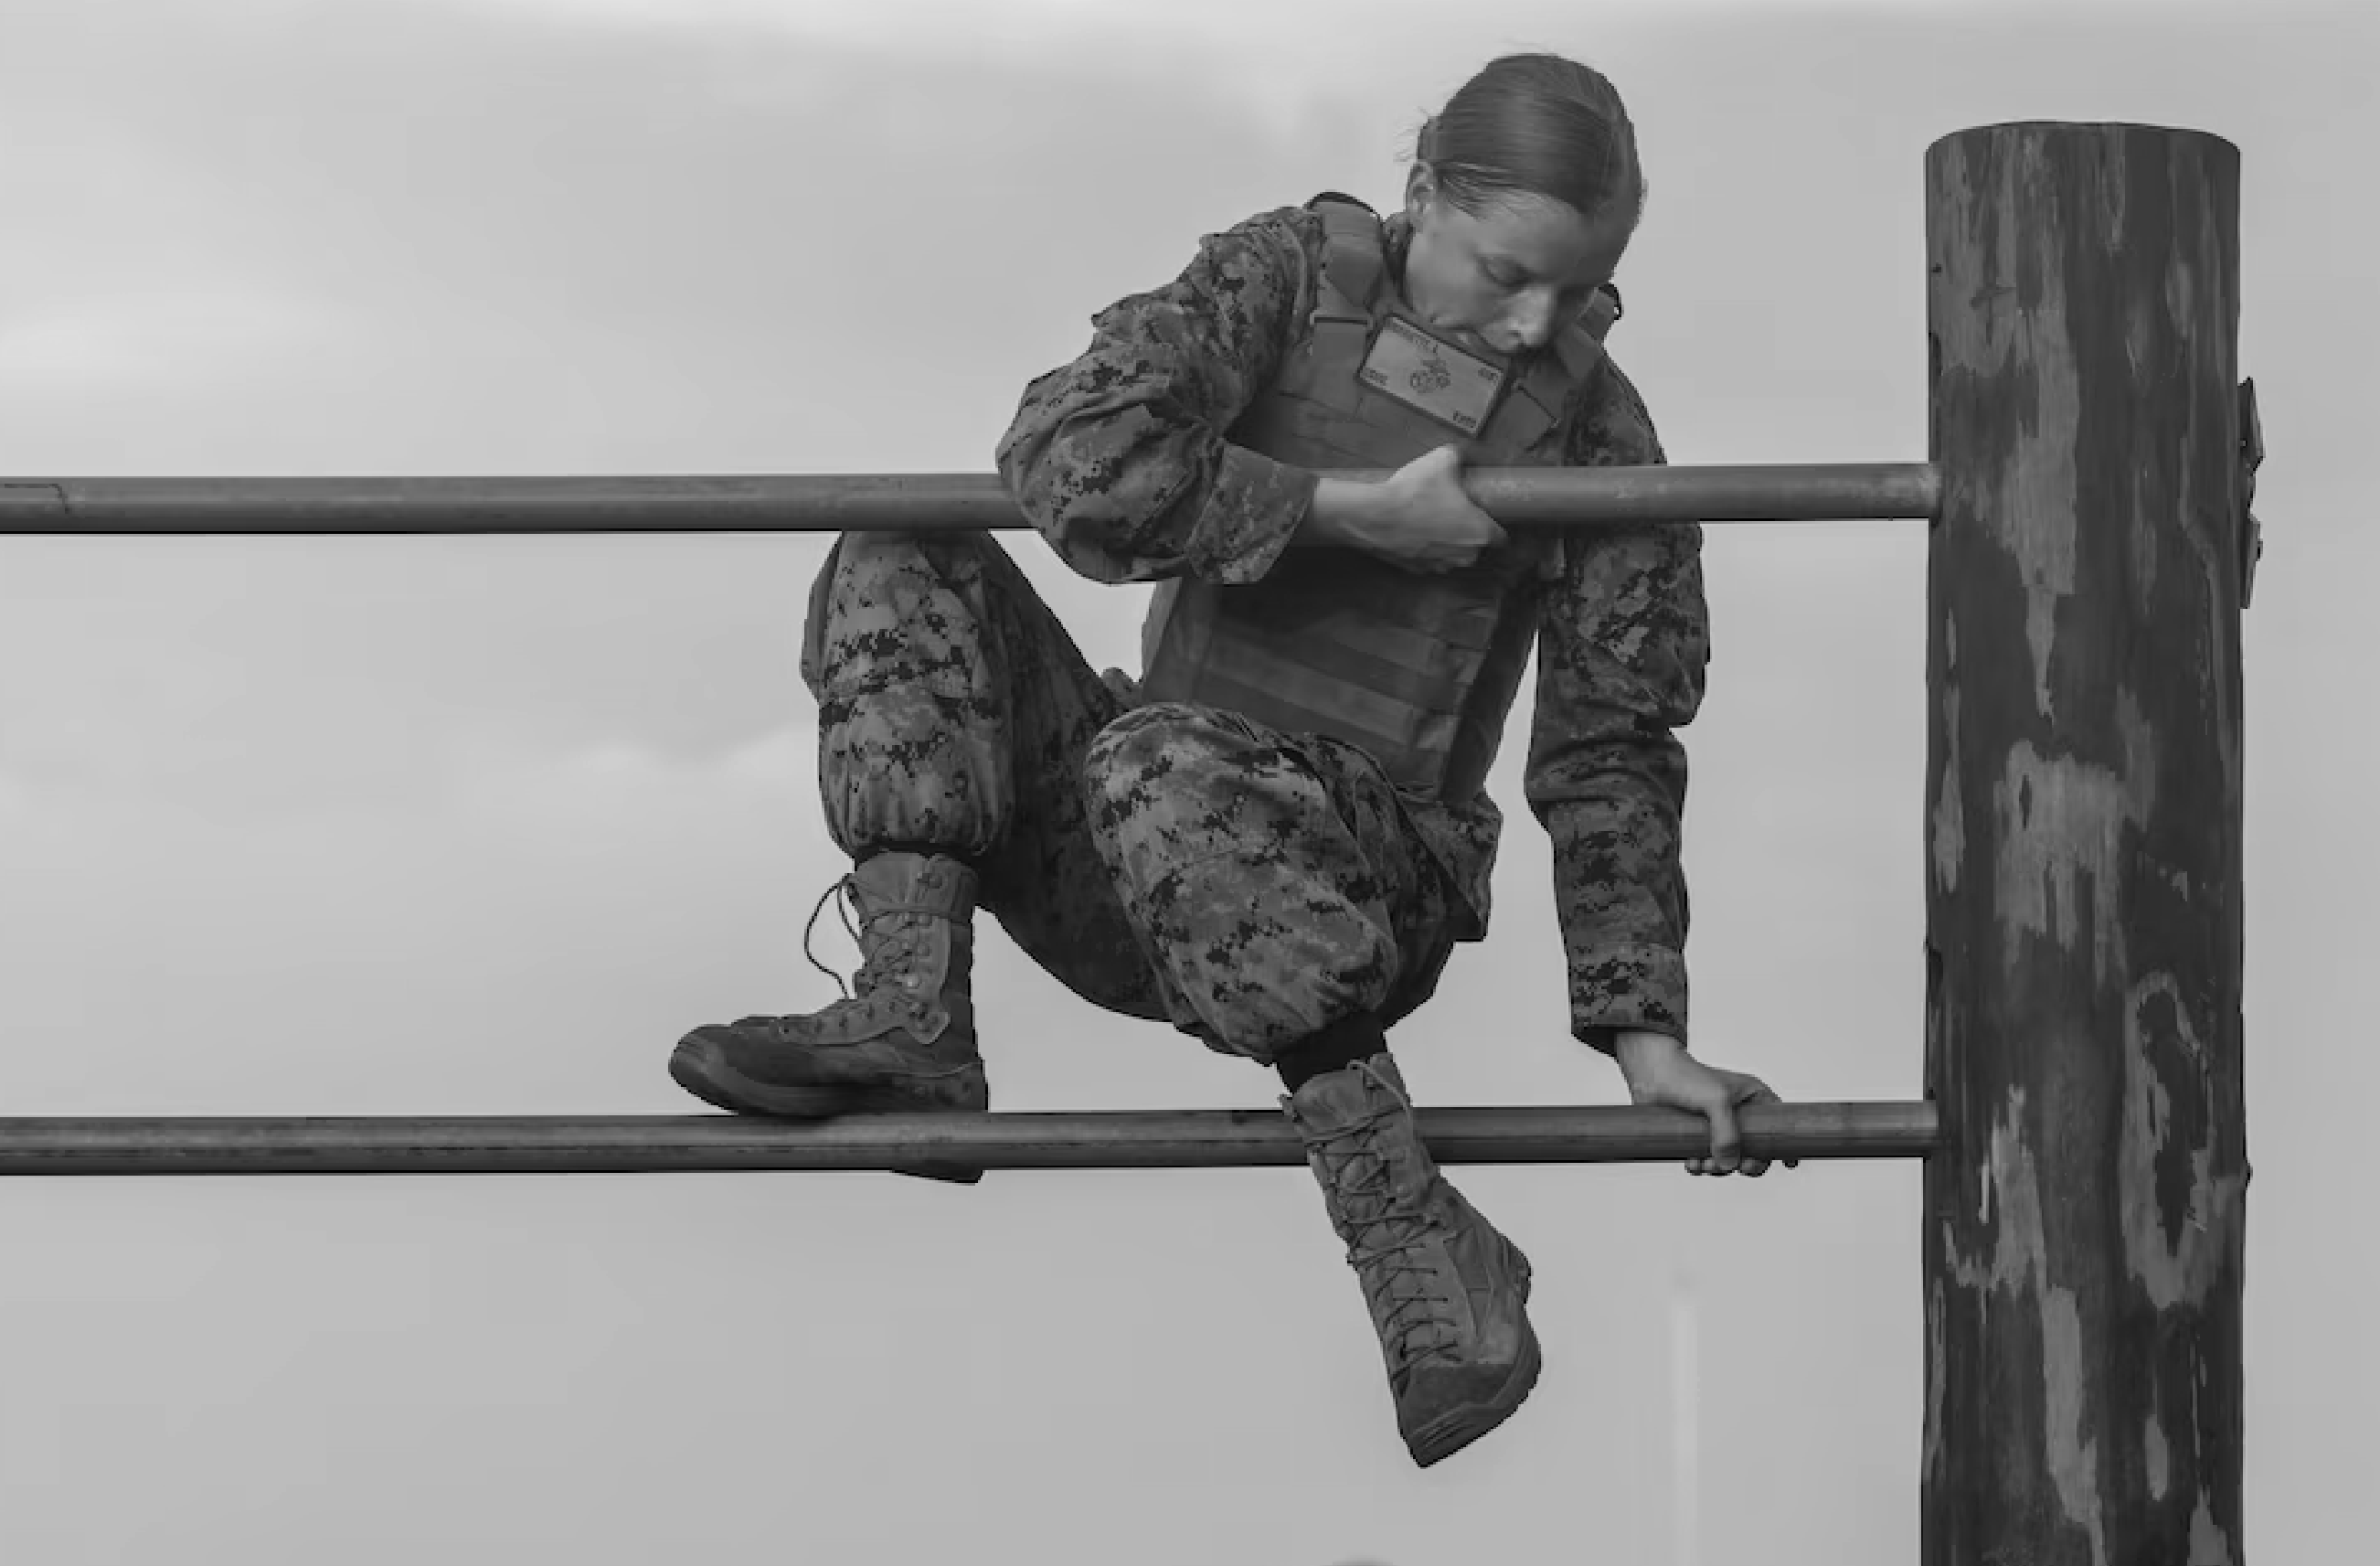 Woman in military uniform climbing